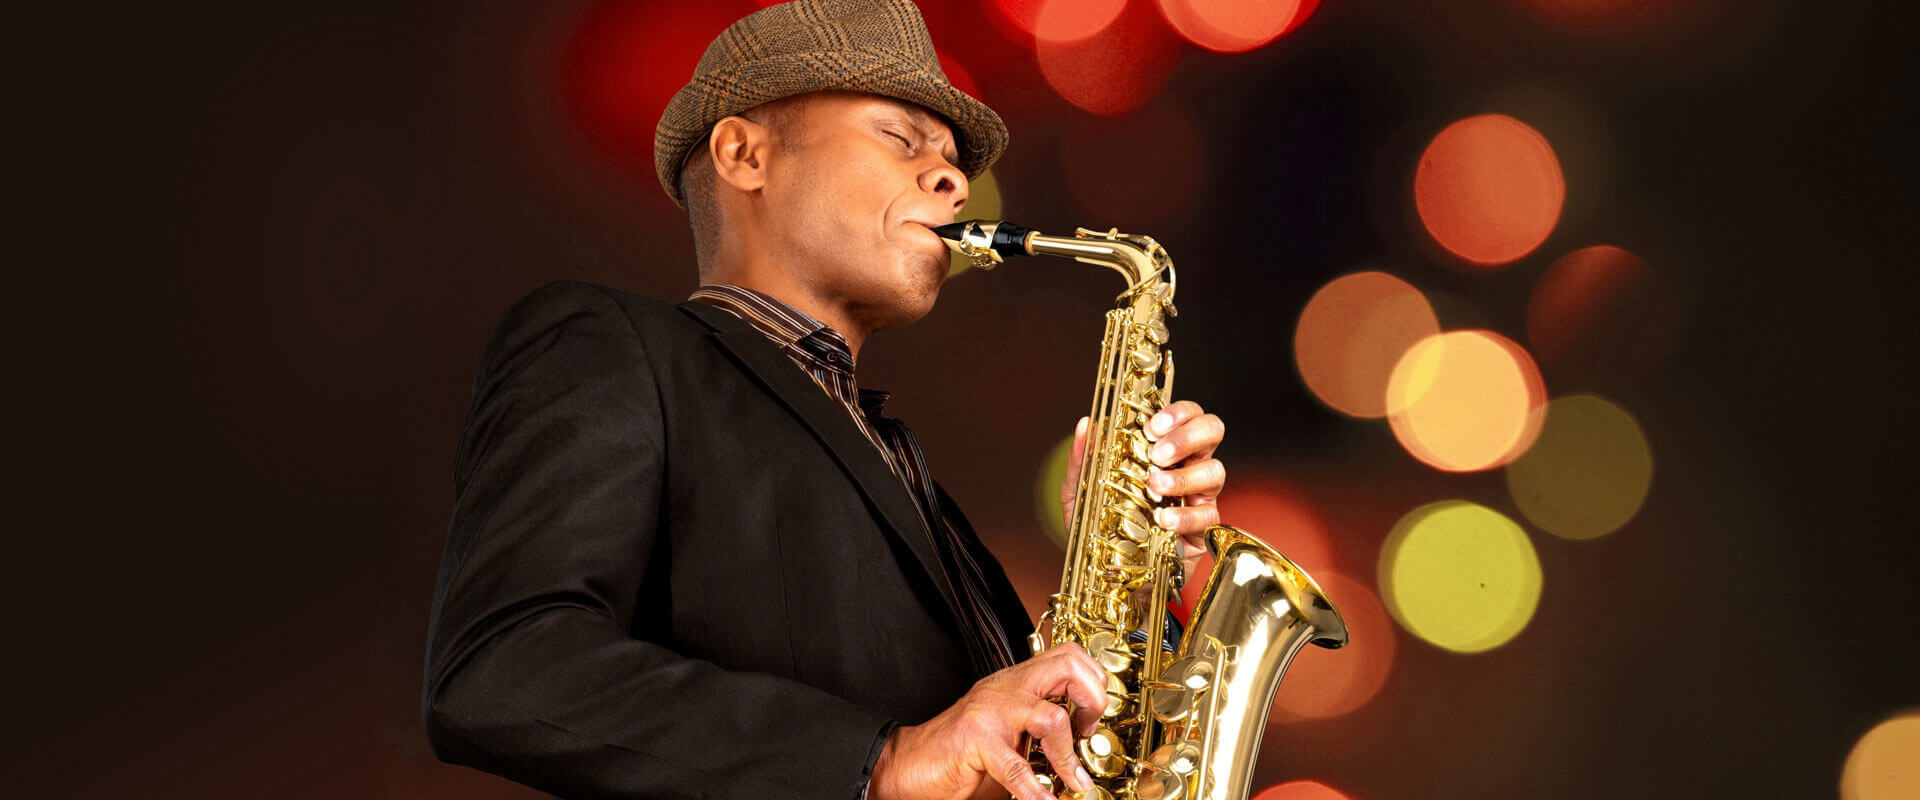 Saxophone Lessons Rockland, MA